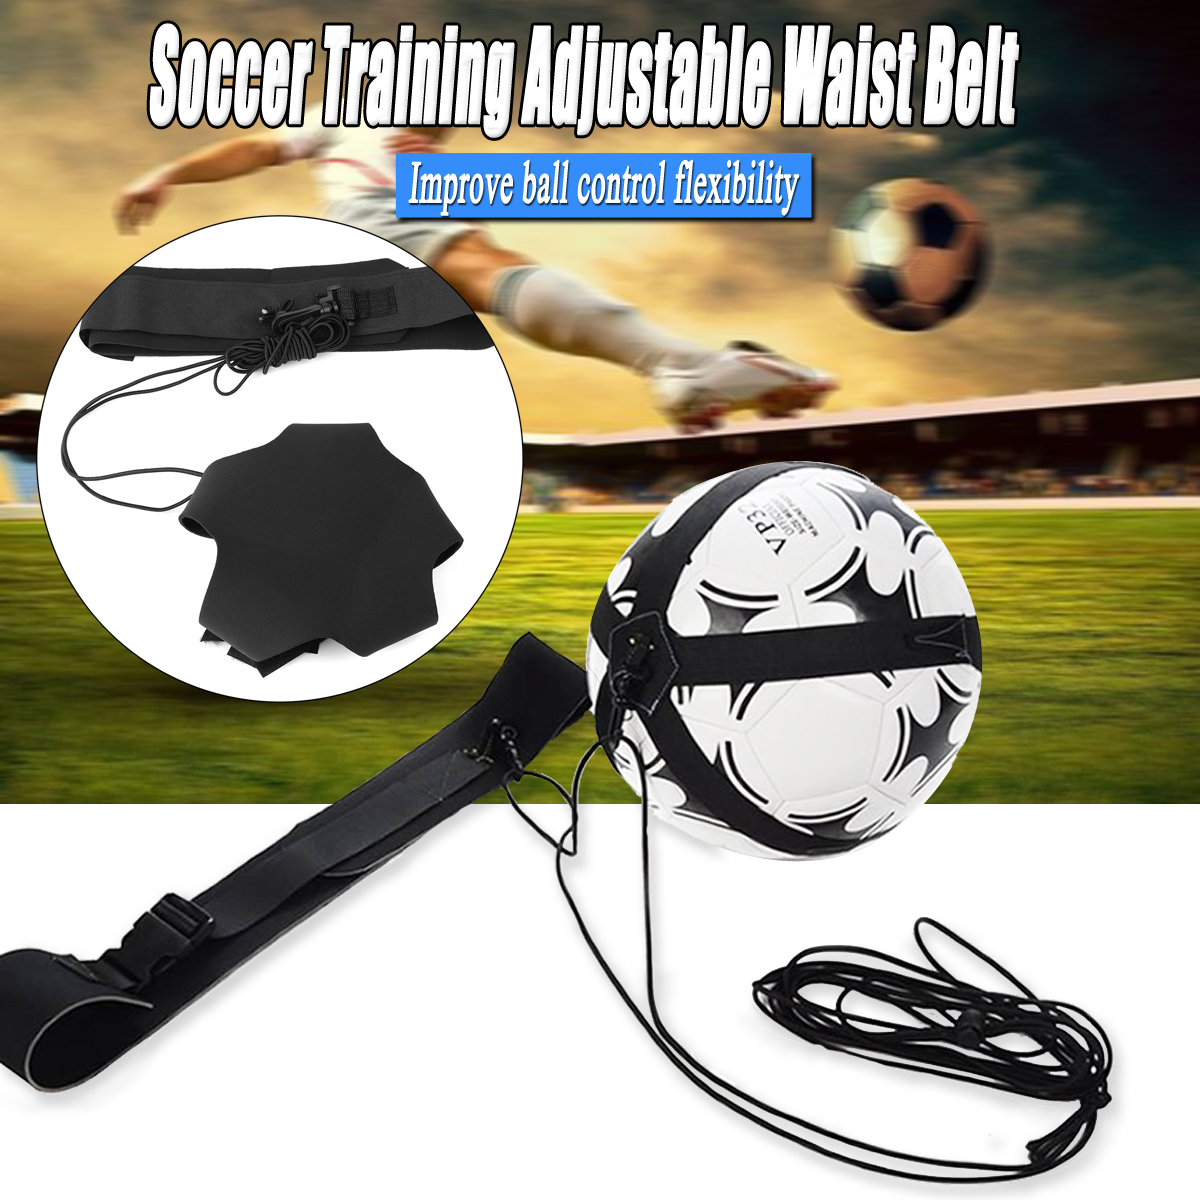 Football-Kick-Trainer-Skill-Soccer-Training-Equipment-Adjustable-Waist-Belt-1308656